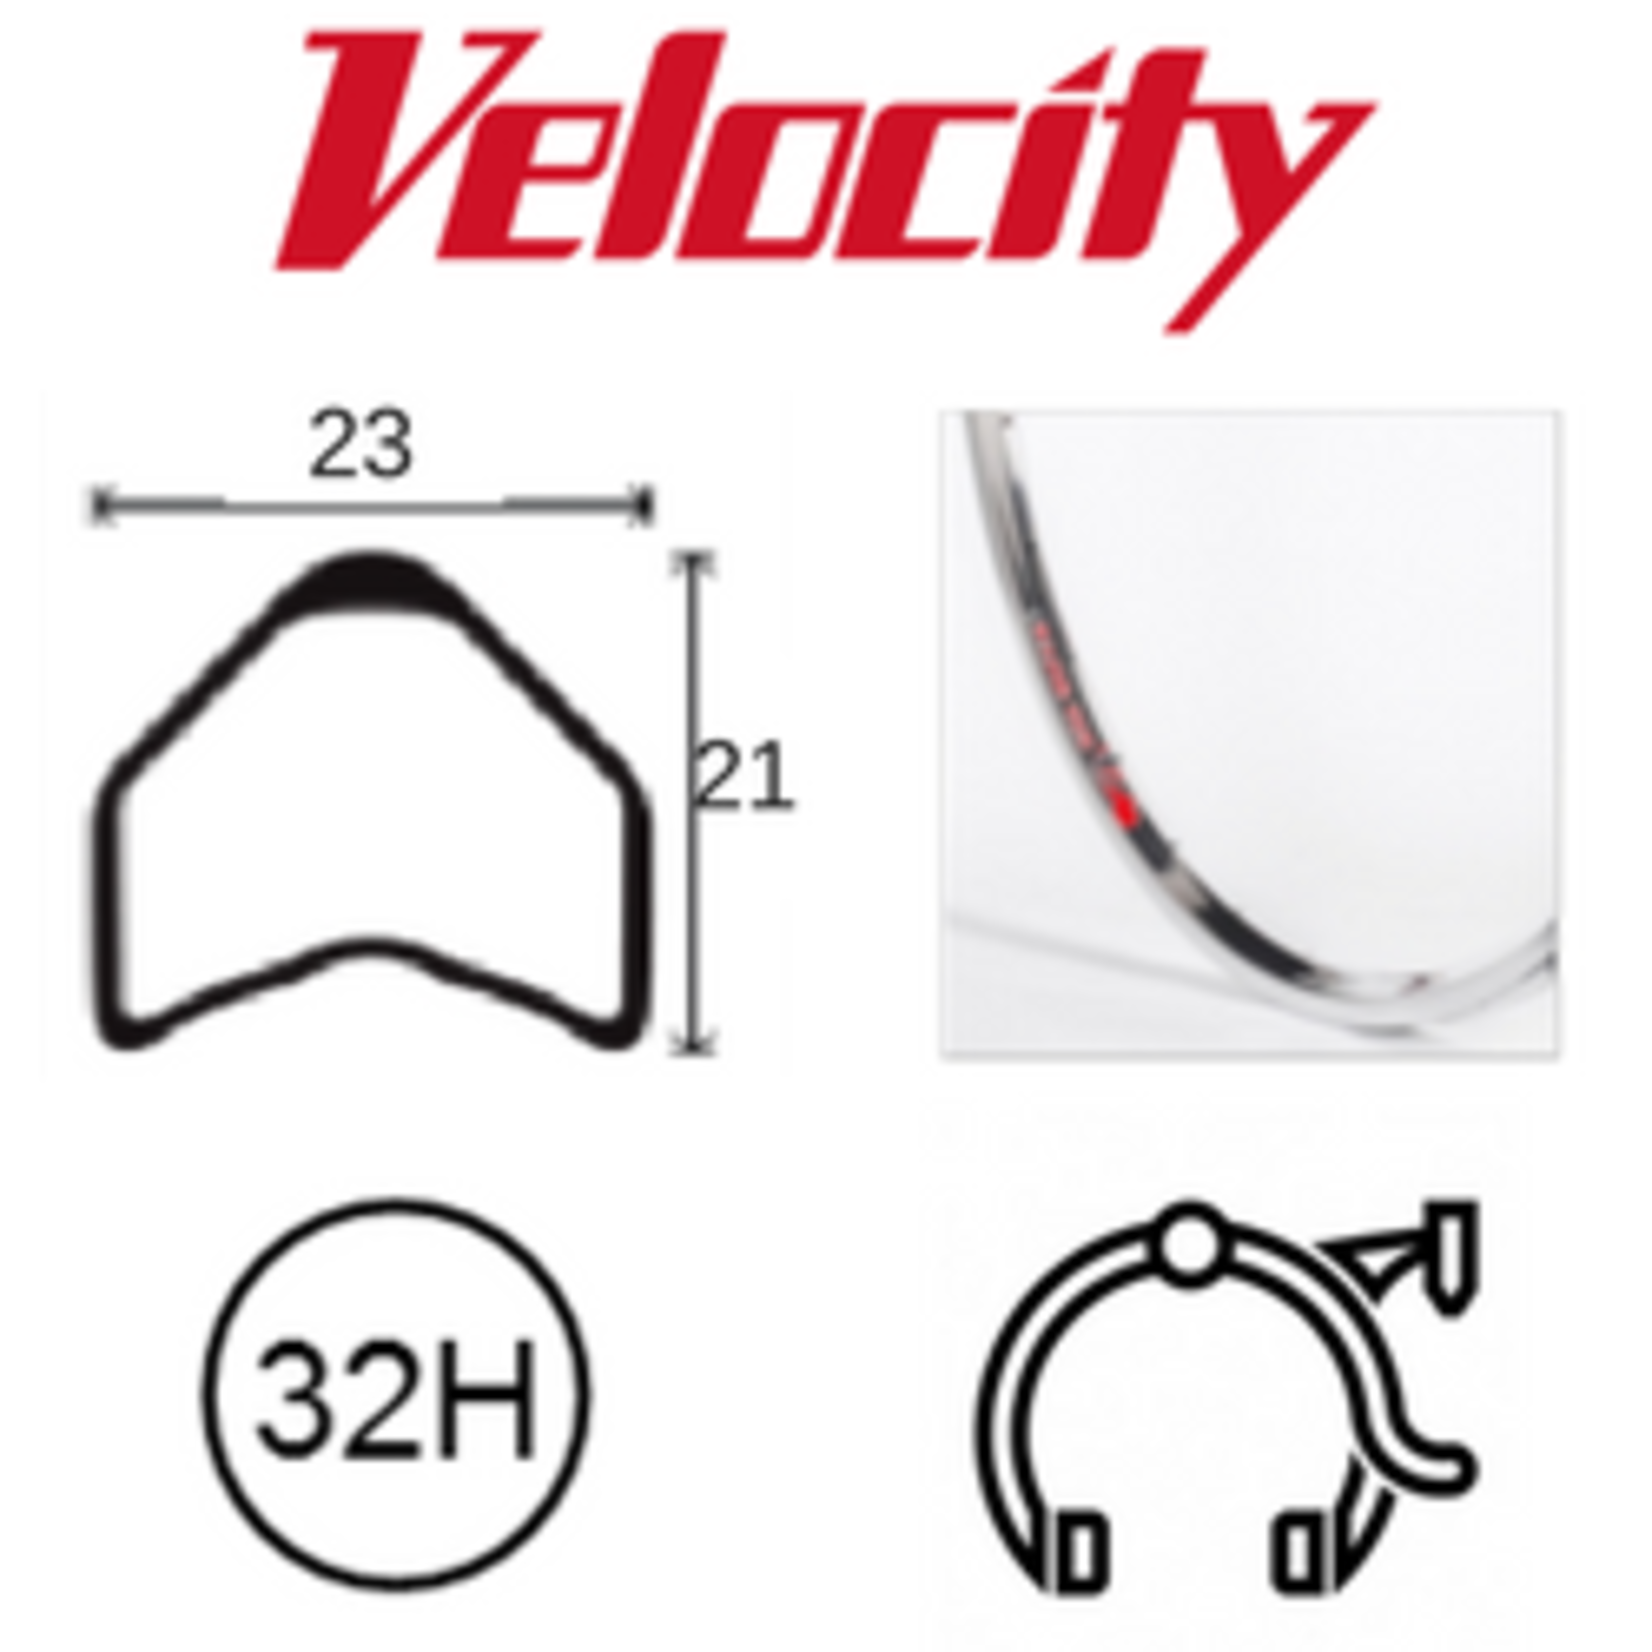 velocity Velocity Rim - Major Tom 700C 32H Hand Polished MSW (Tubular Rim)